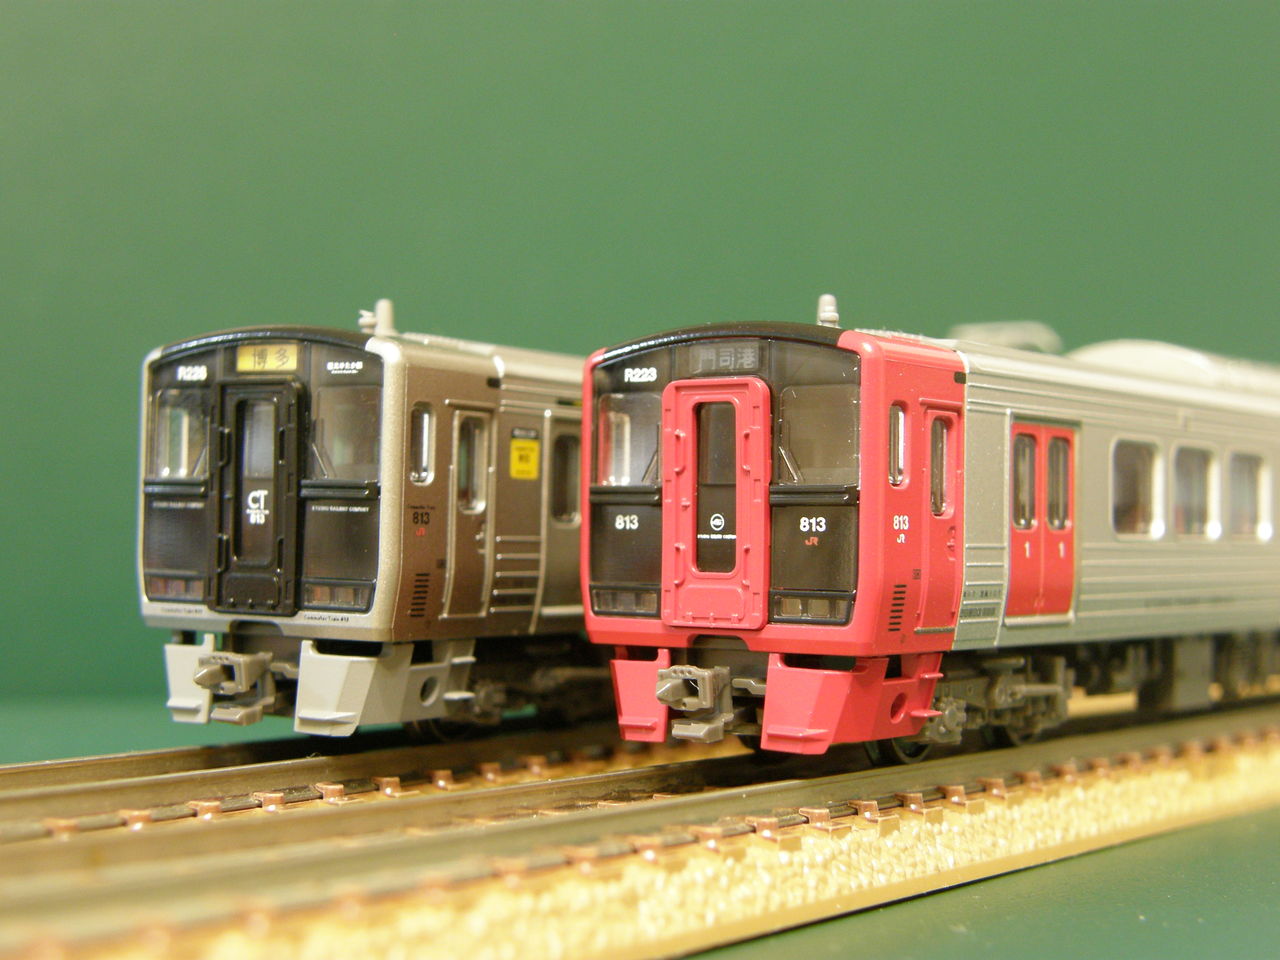 KATO Nゲージ 813系 200番台 福北ゆたか線 3両セット 10-814 鉄道模型 電車 g6bh9ry